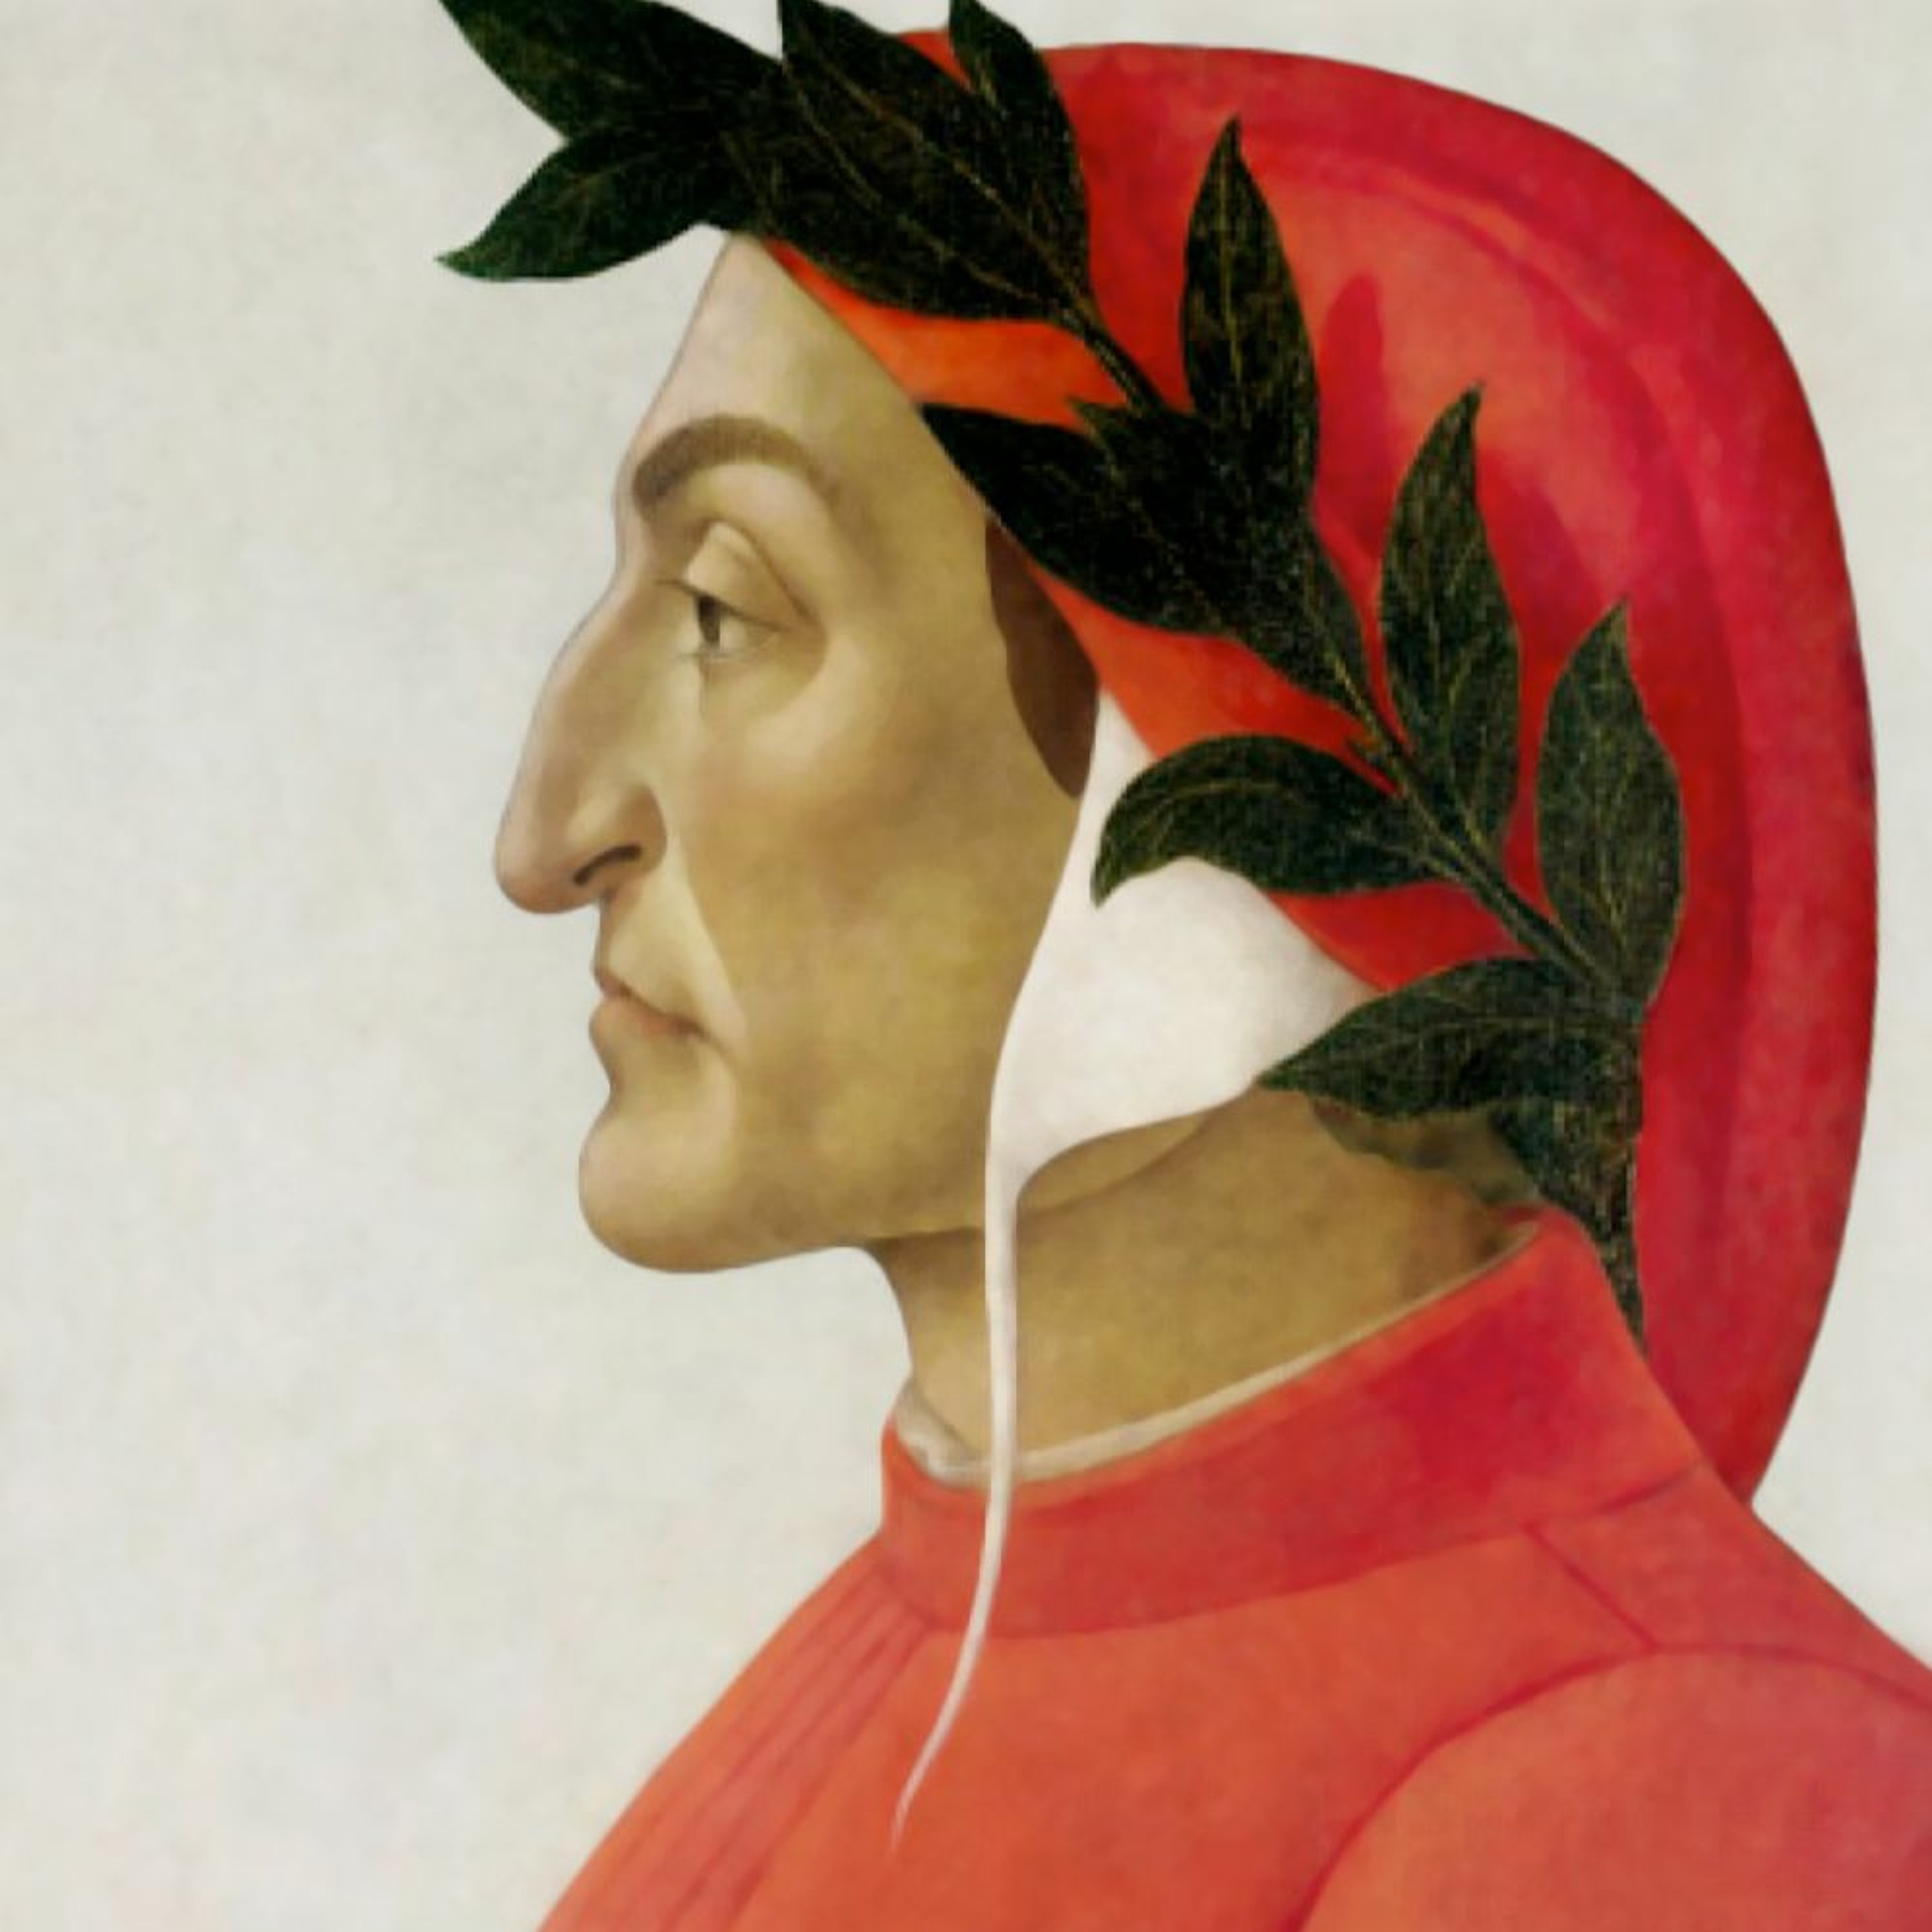 Dante as Poet and Philosopher